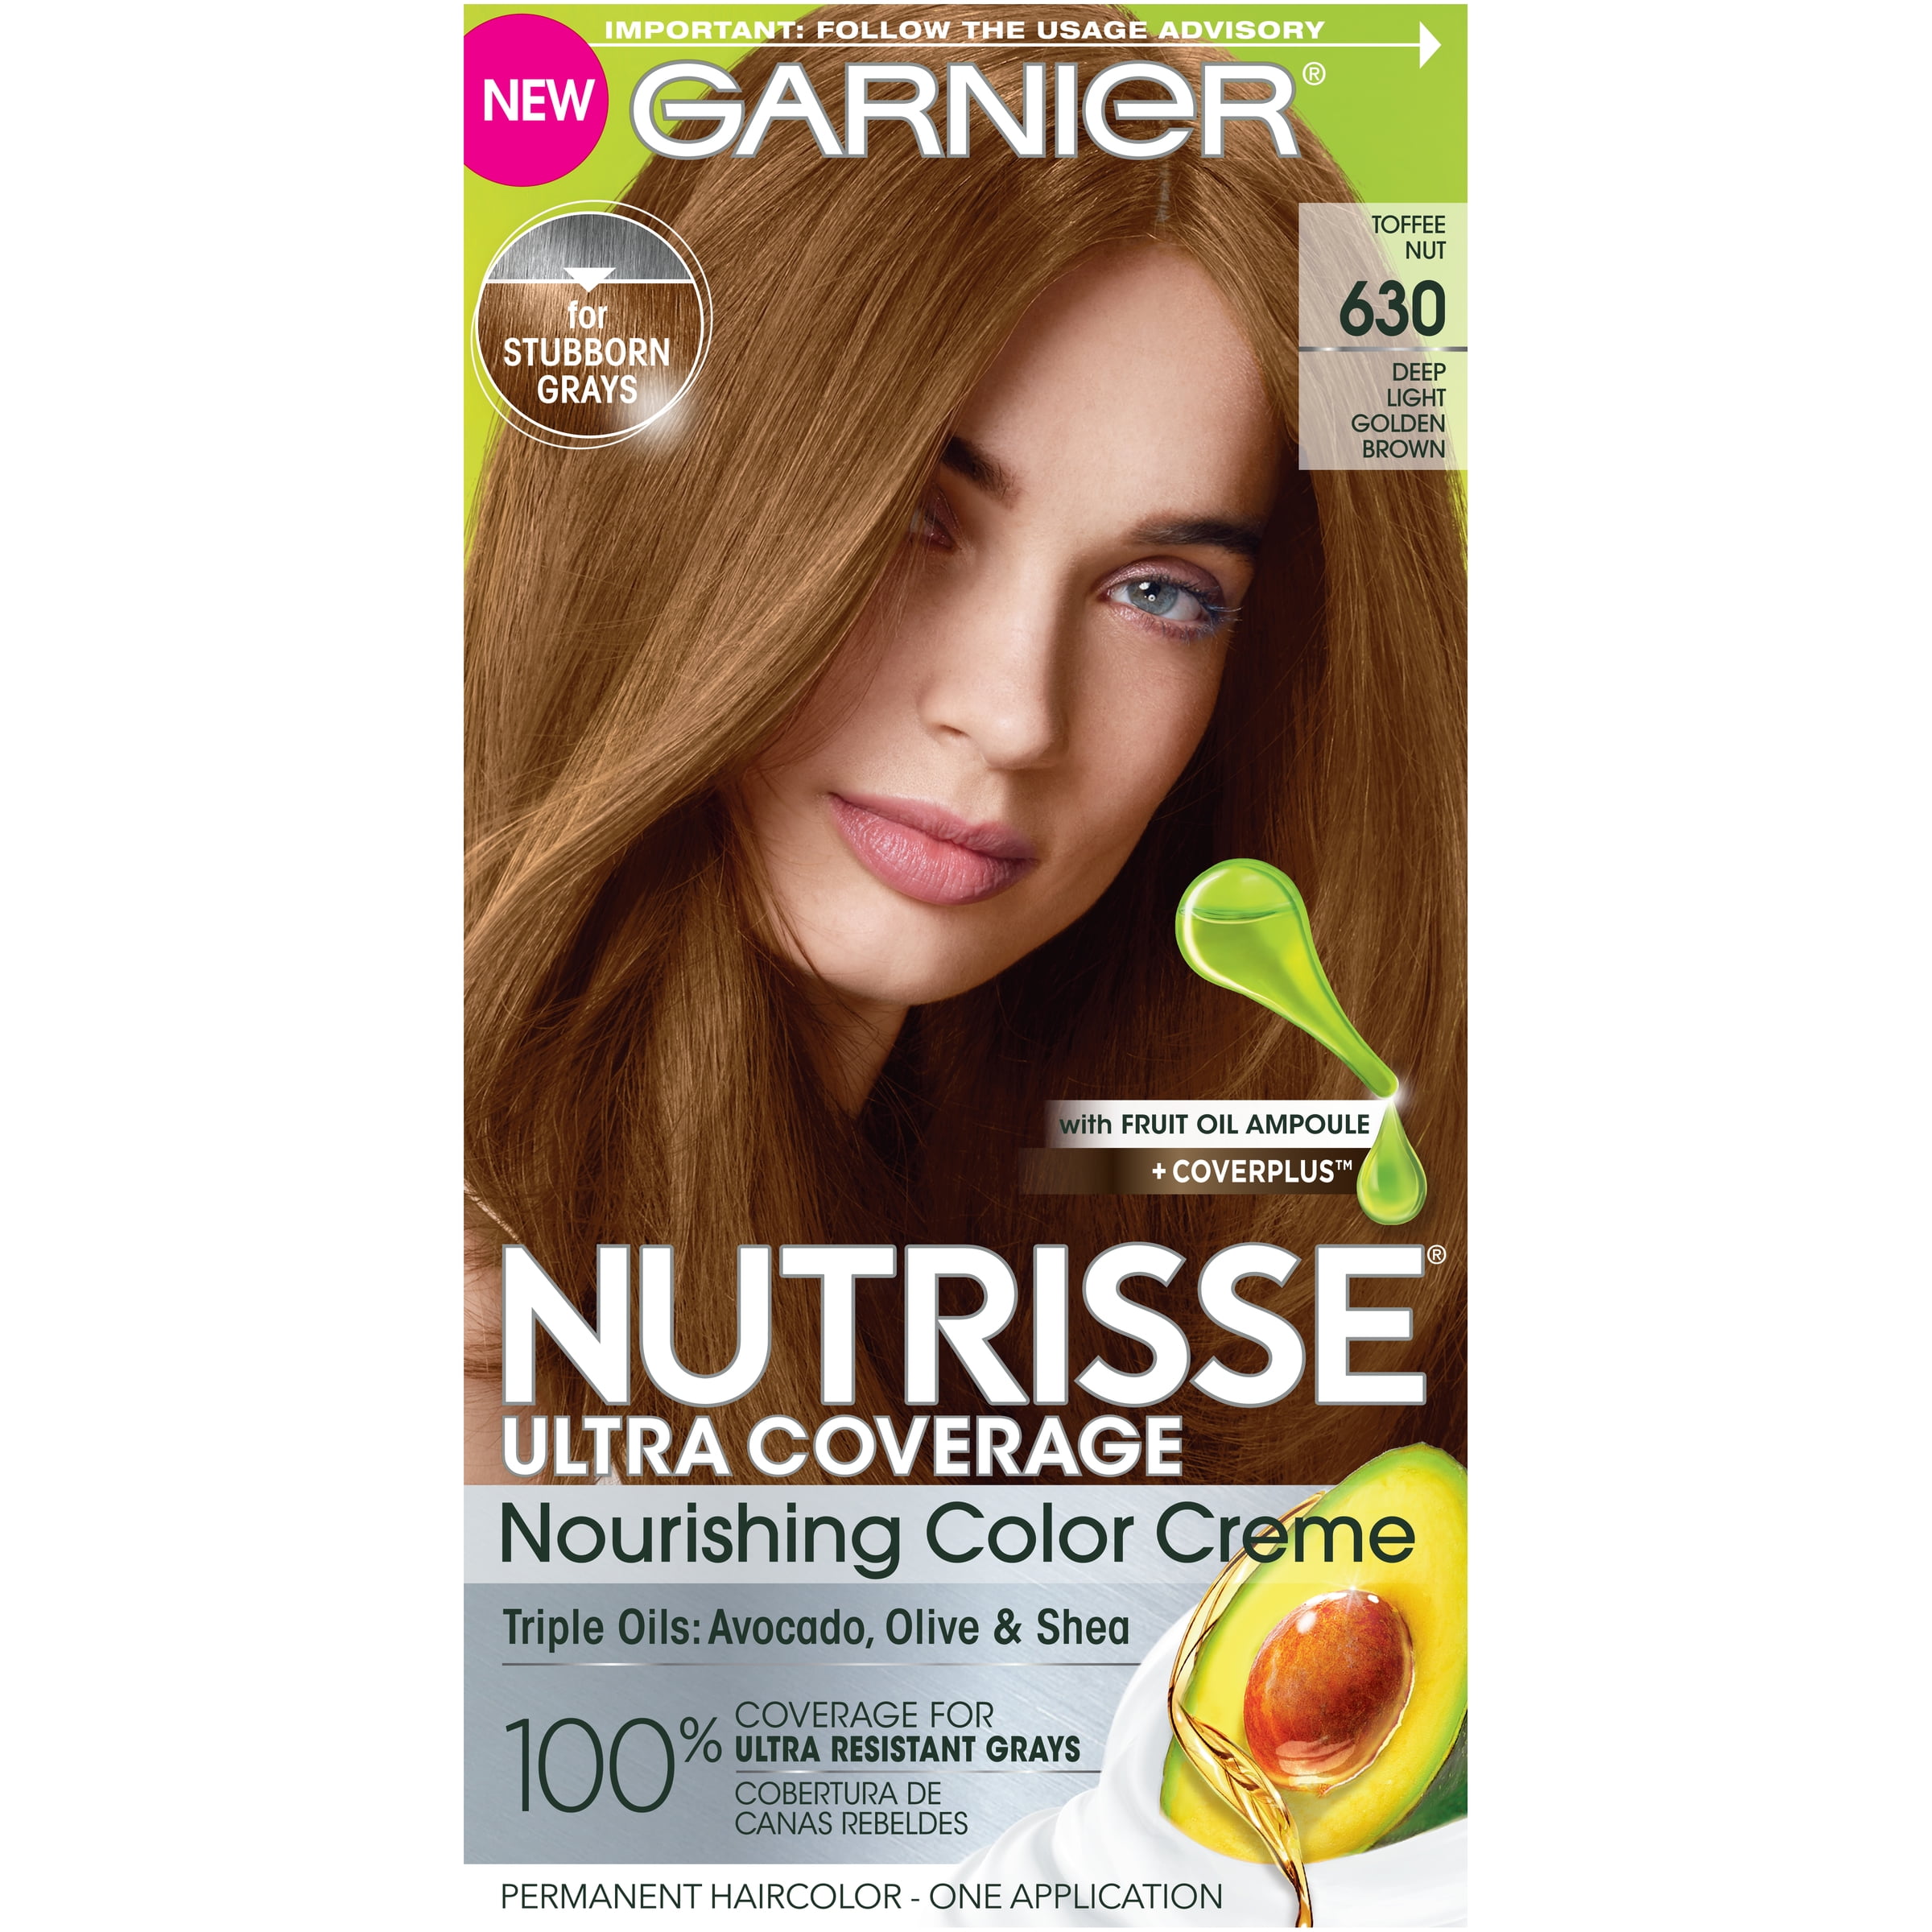 Garnier Nutrisse Nourishing Hair Color Creme 500 Deep Medium Natural Brown  